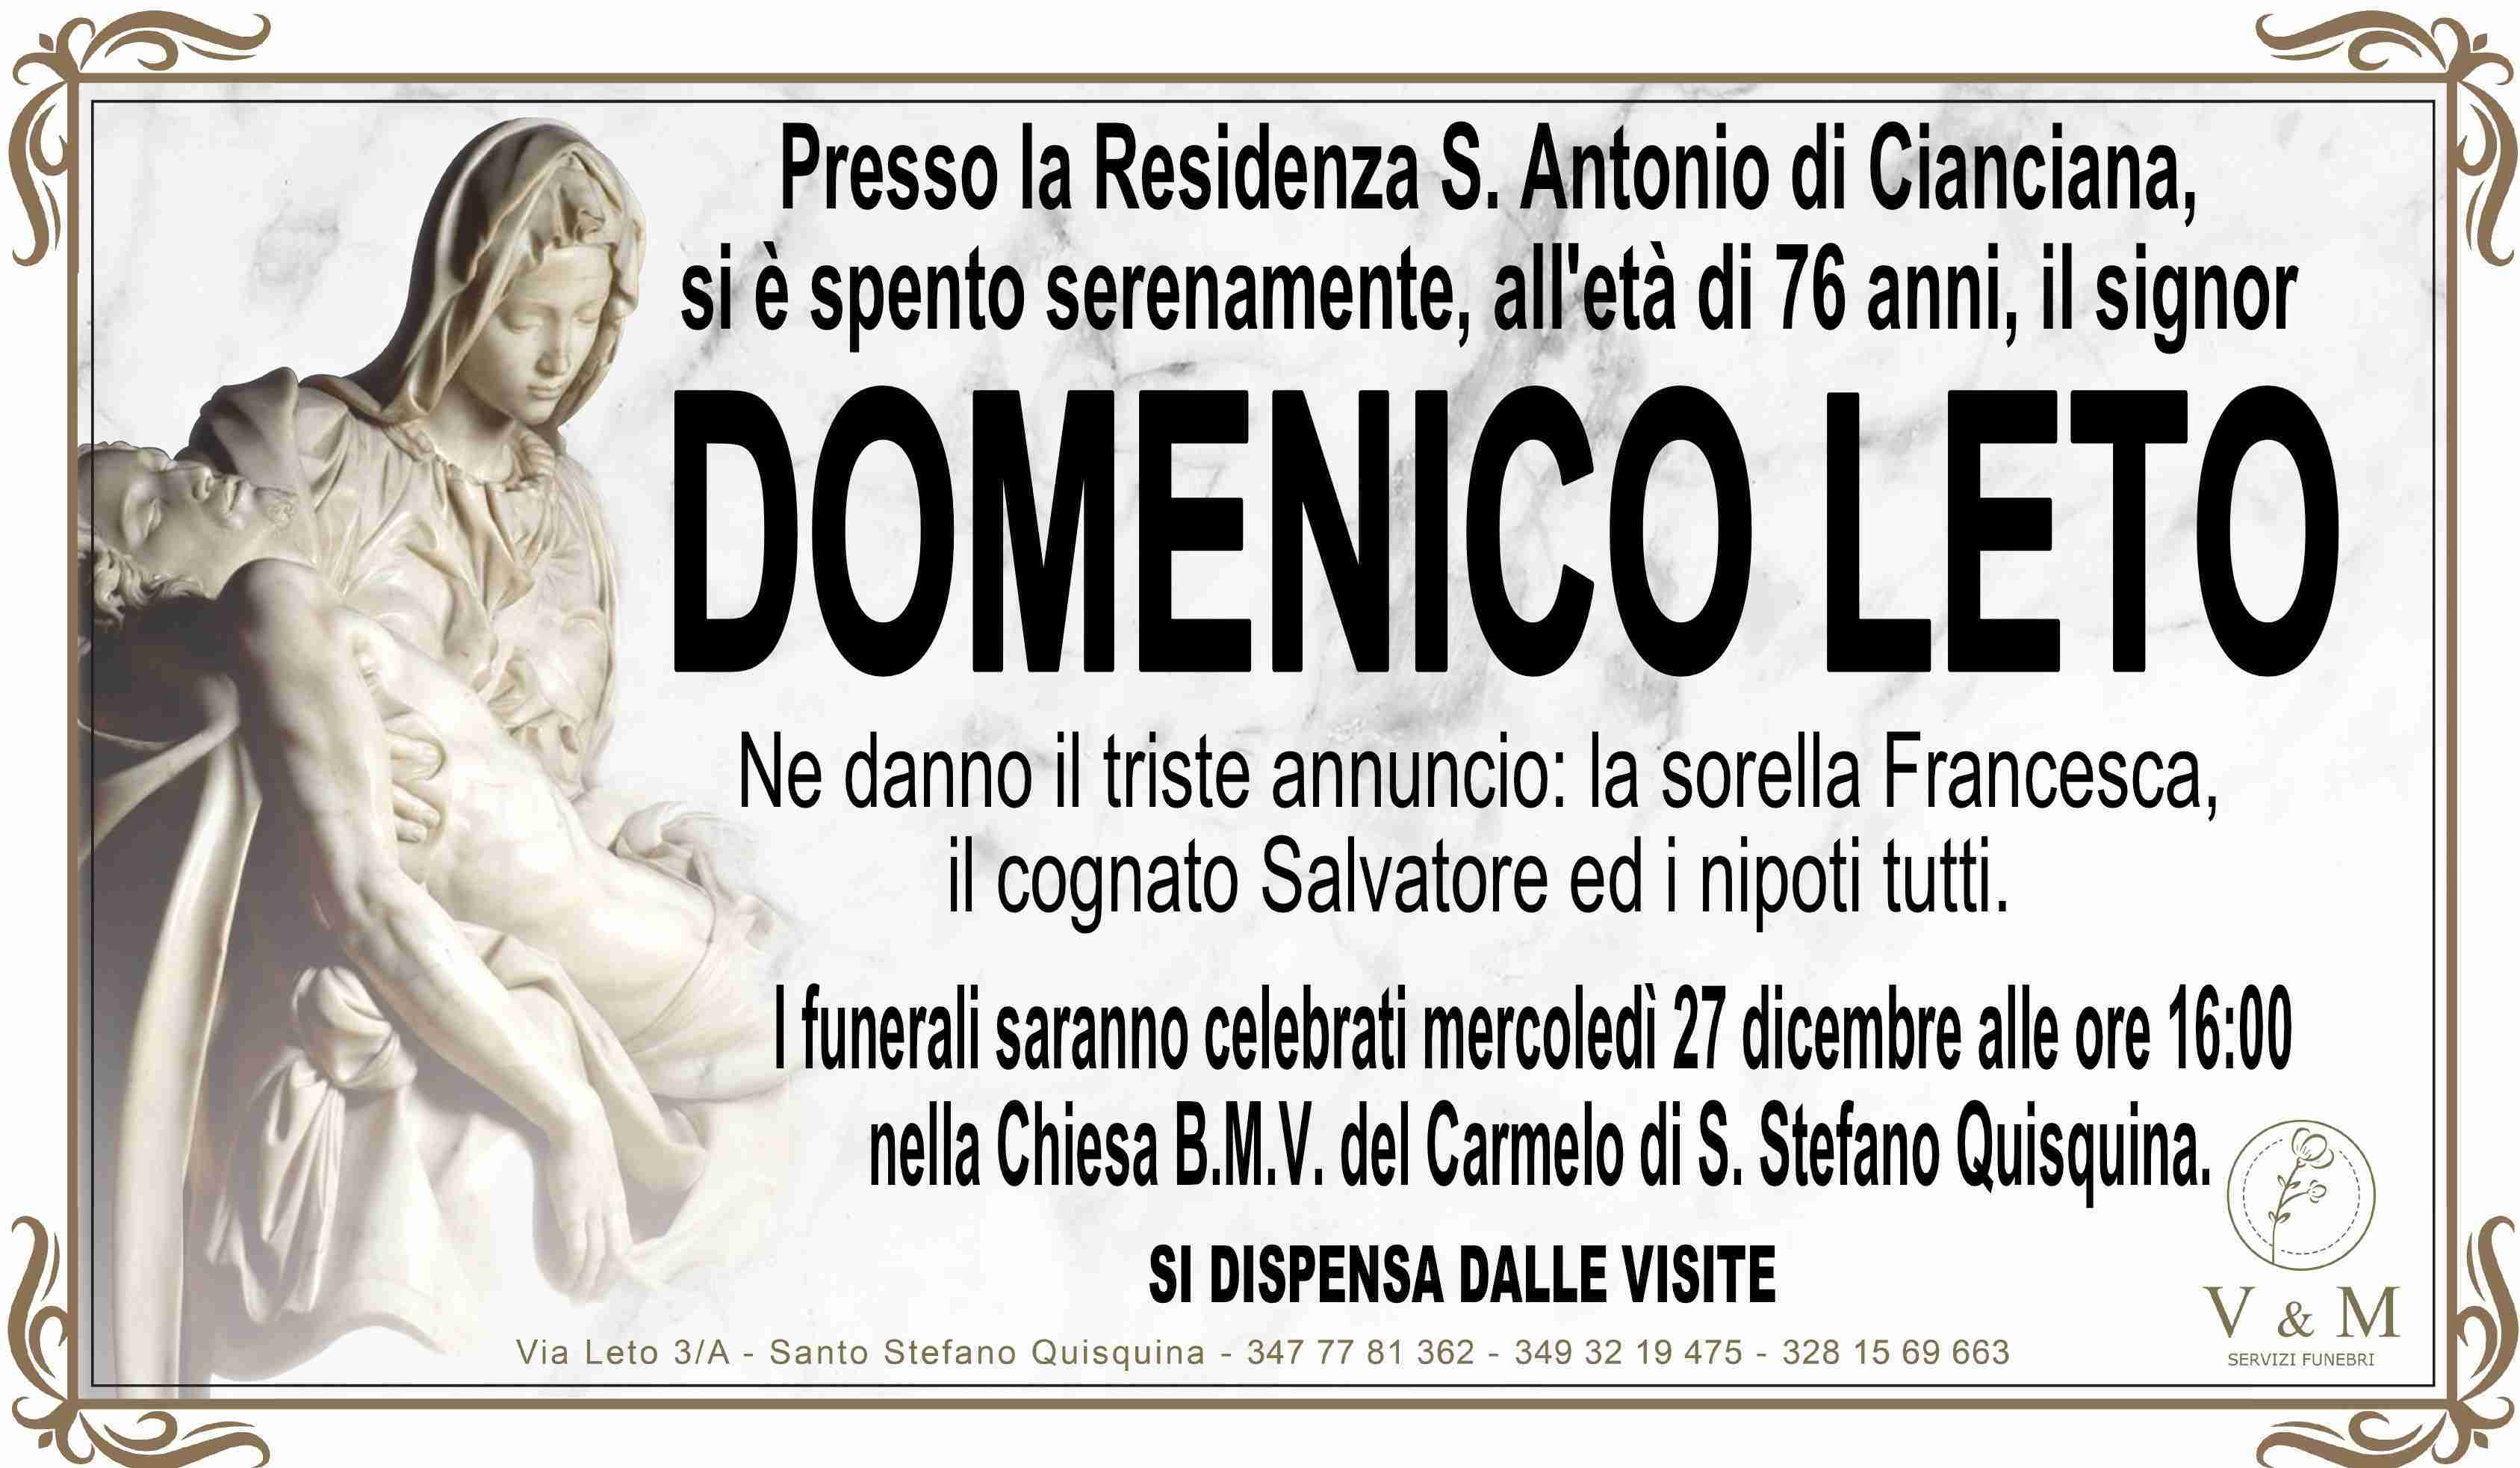 Domenico Leto